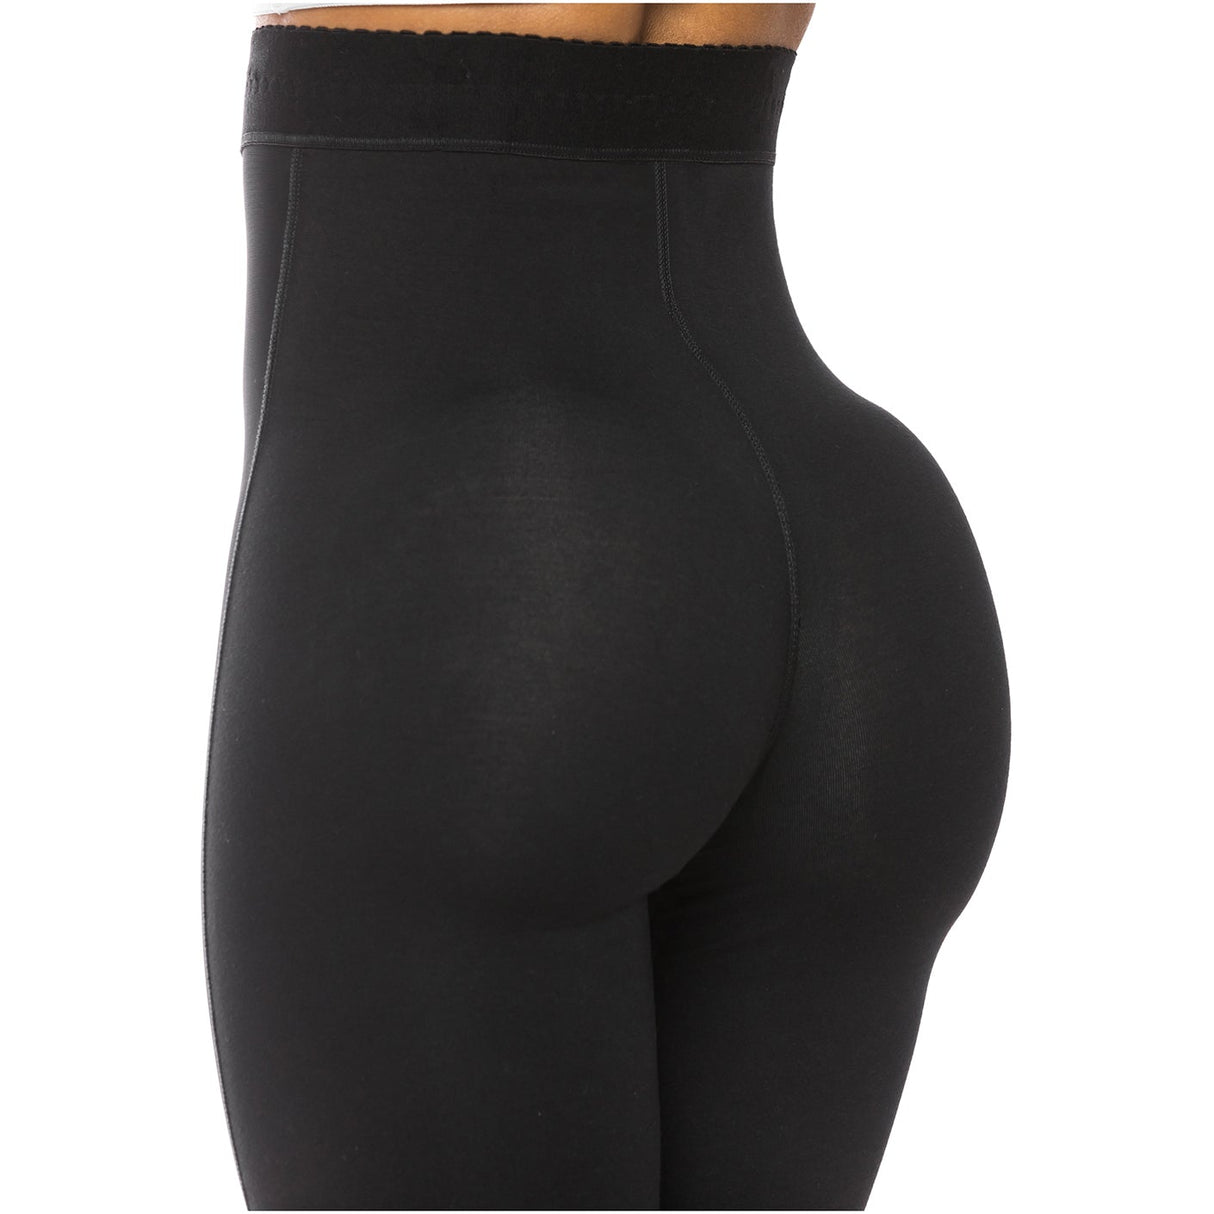 Salome 0219 Fajas Colombianas Reductoras High Waisted Butt Lifting  Shapewear Capri Leggings Black S 